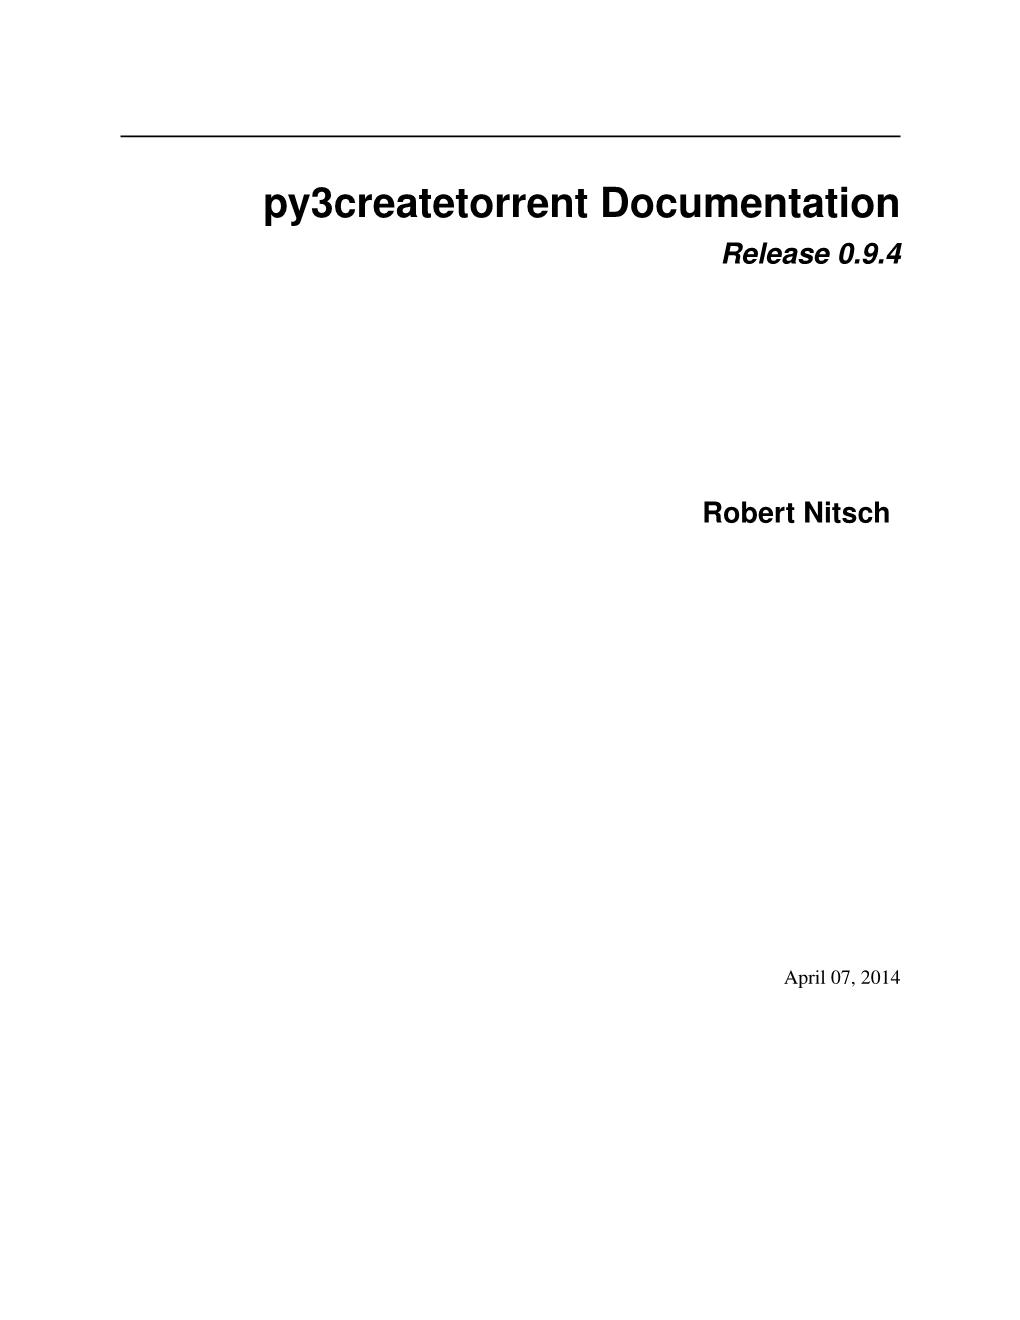 Py3createtorrent Documentation Release 0.9.4